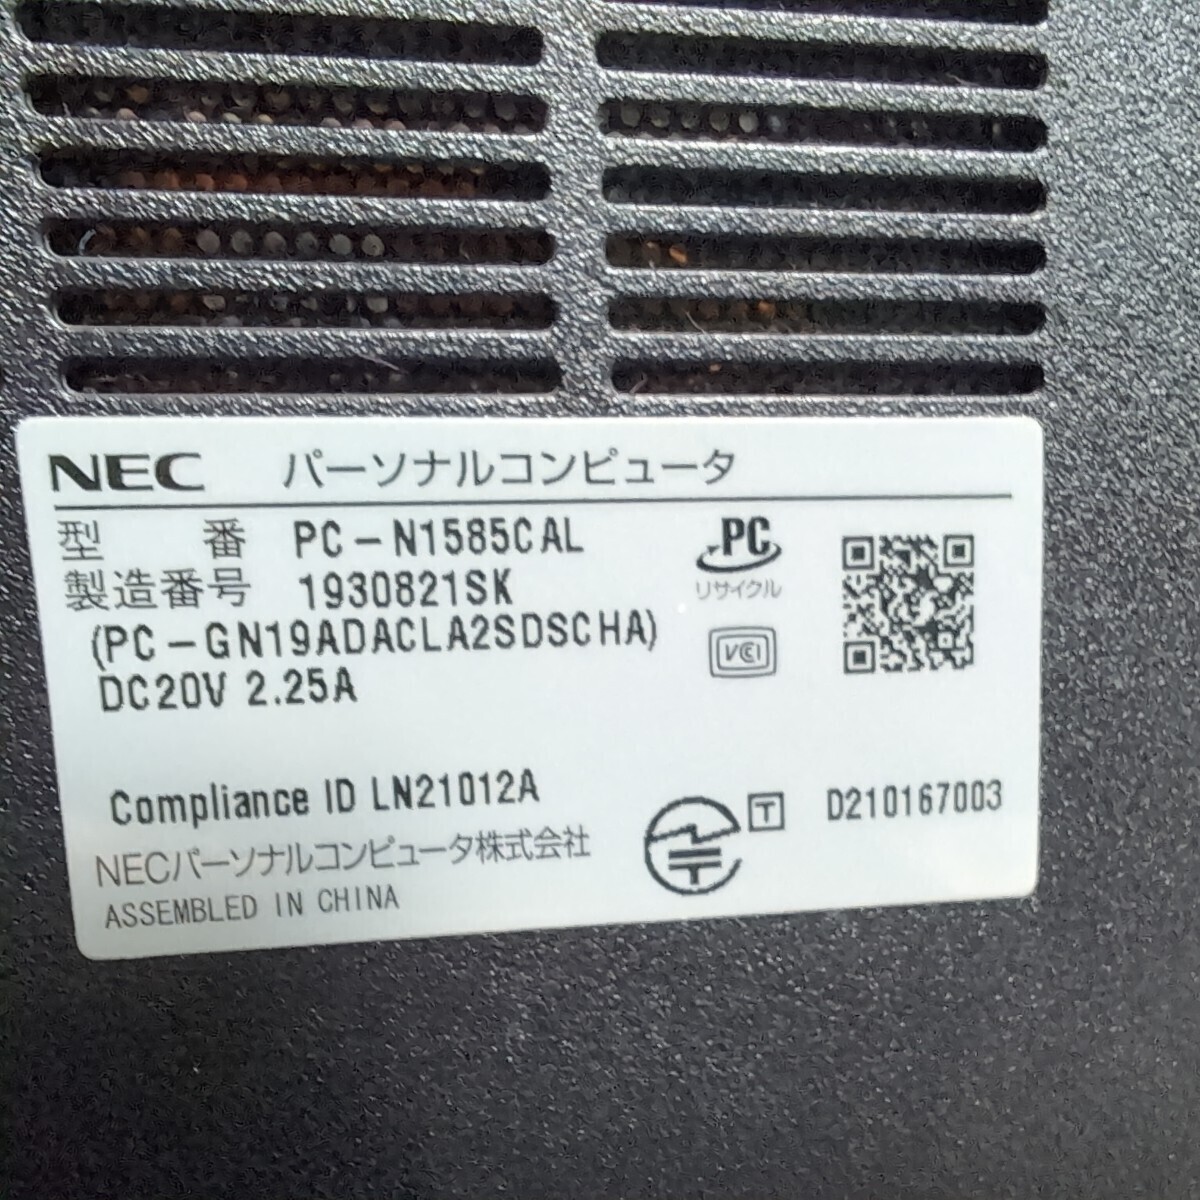 NEC PC-N1585CAL*AMD Ryzen 7 5800U 1.9GHz/8 core /SSD:1TB/16GB/15.6 type /office attaching /IPS liquid crystal / Yamaha made AudioEngine mounted / Blue-ray 